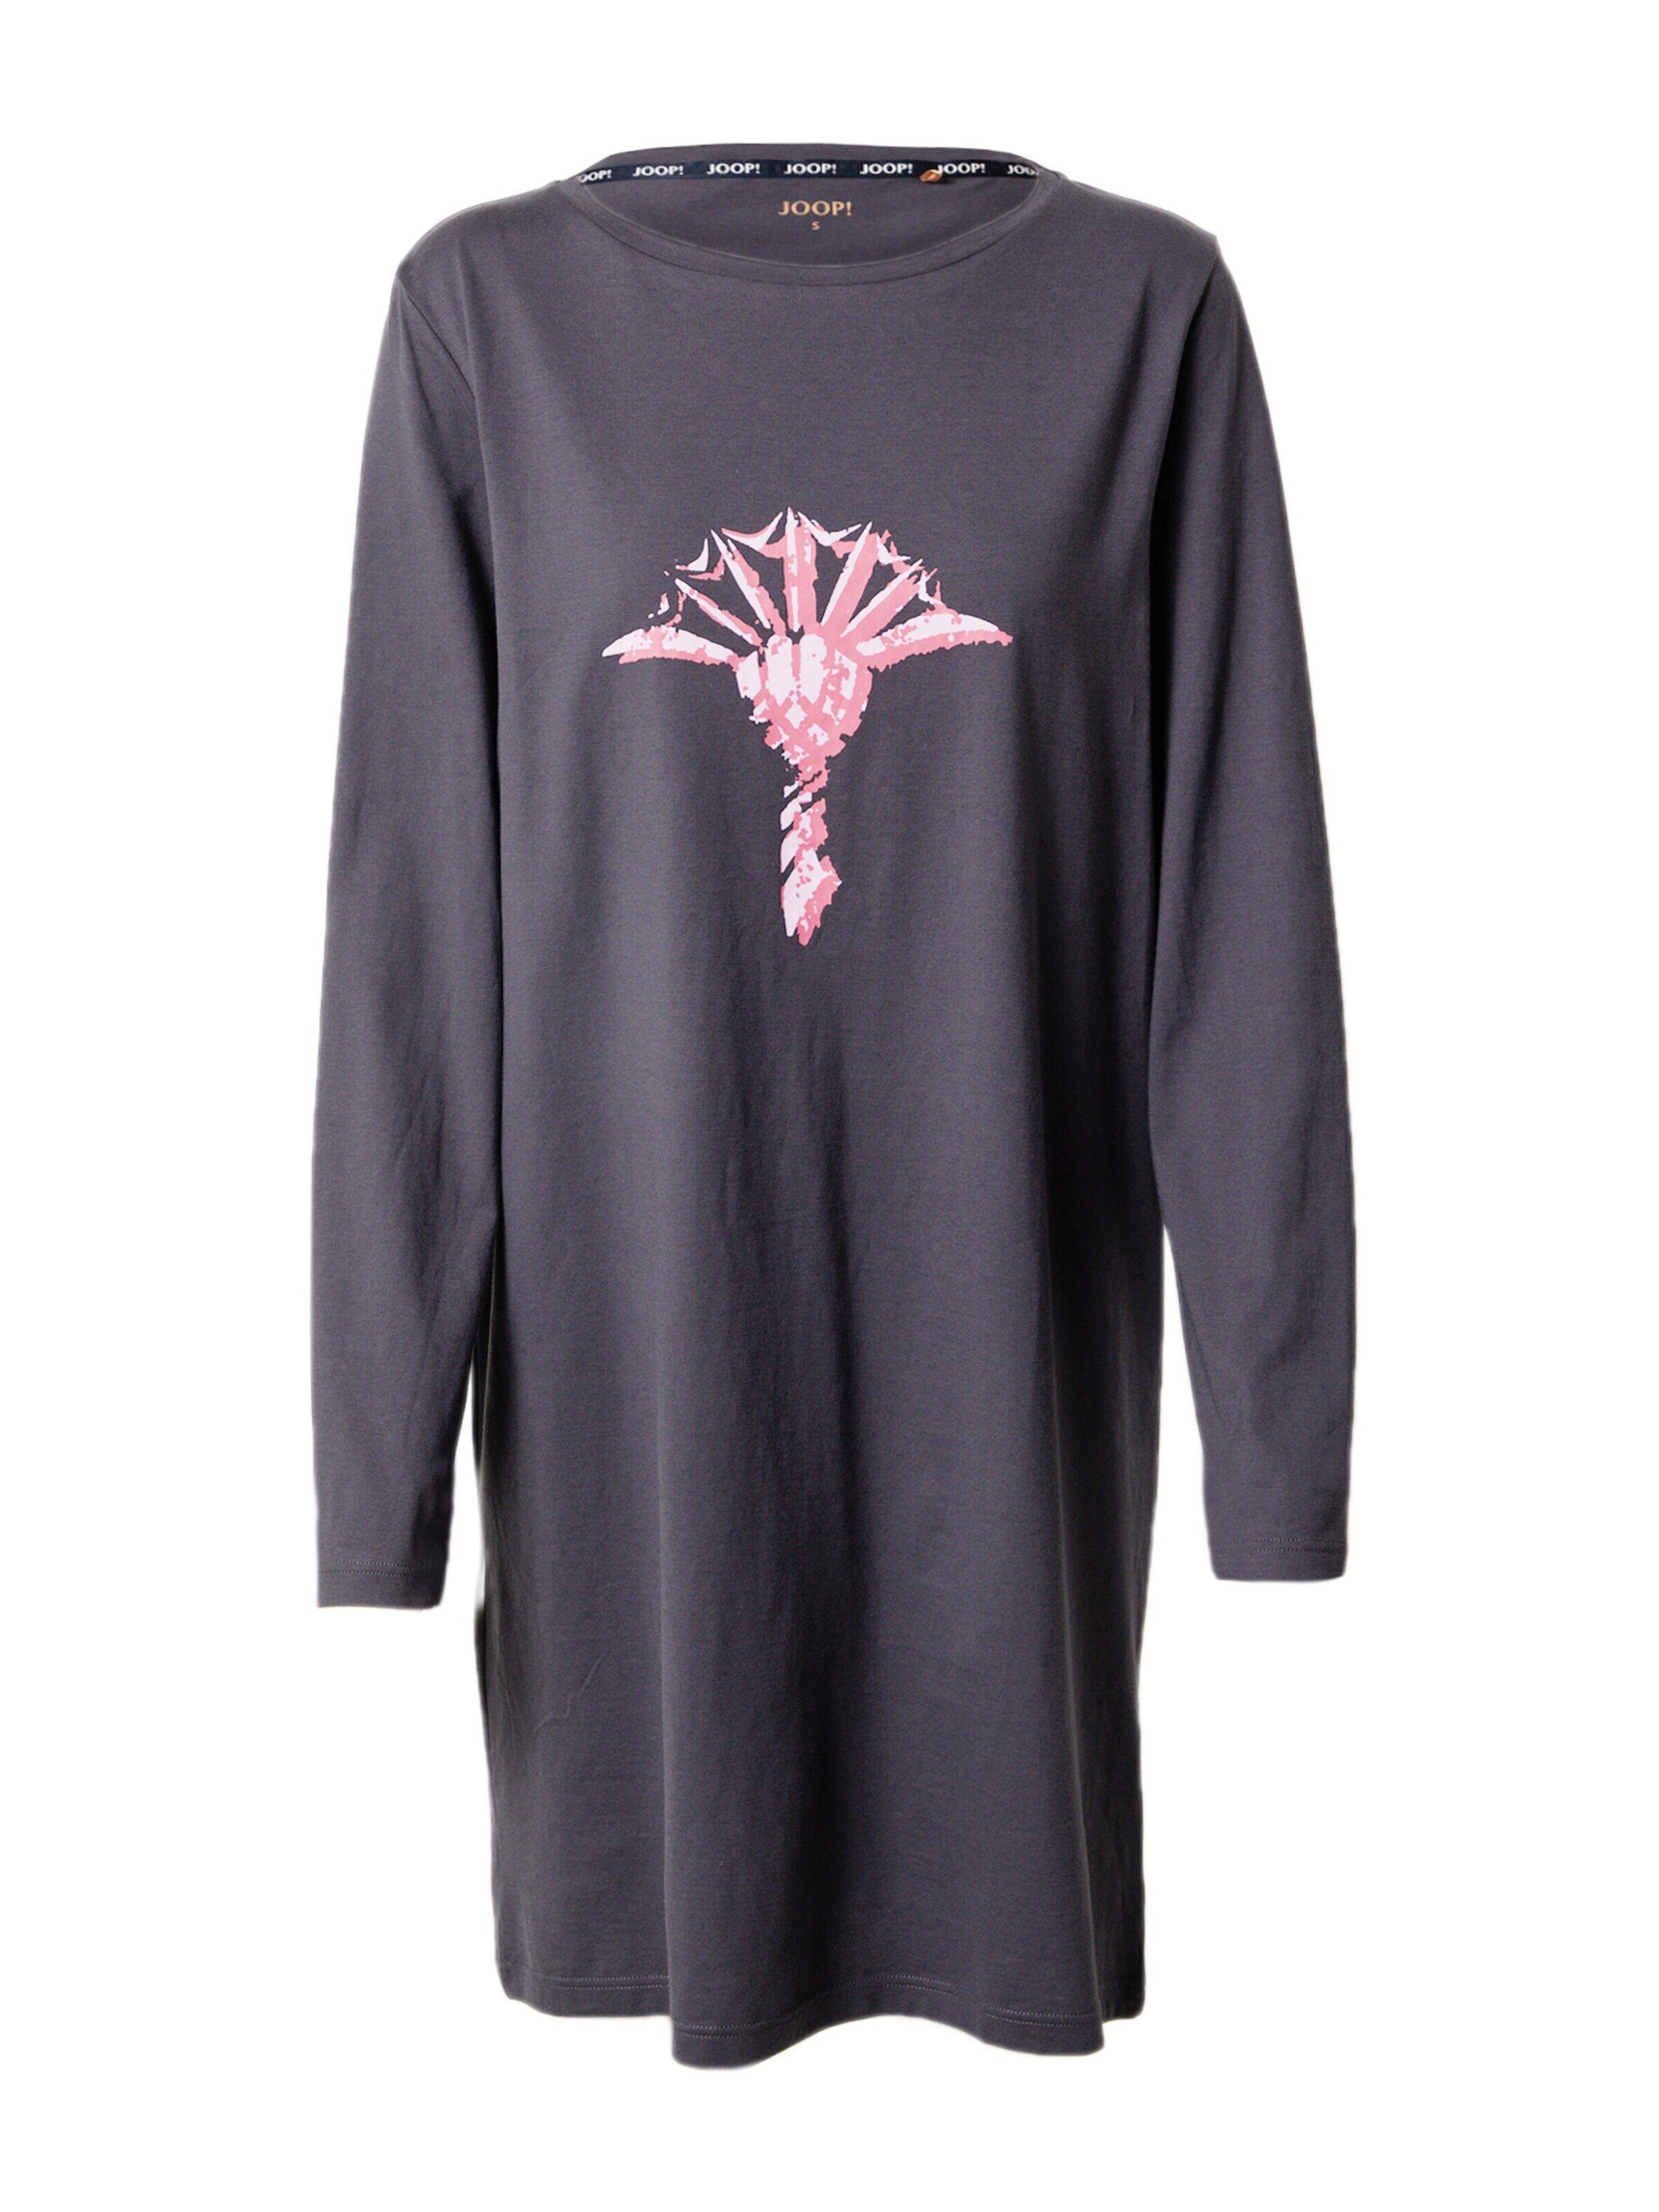 100% Grau/Rosa Material: Joop! Details Kimono, Plain/ohne Baumwolle,